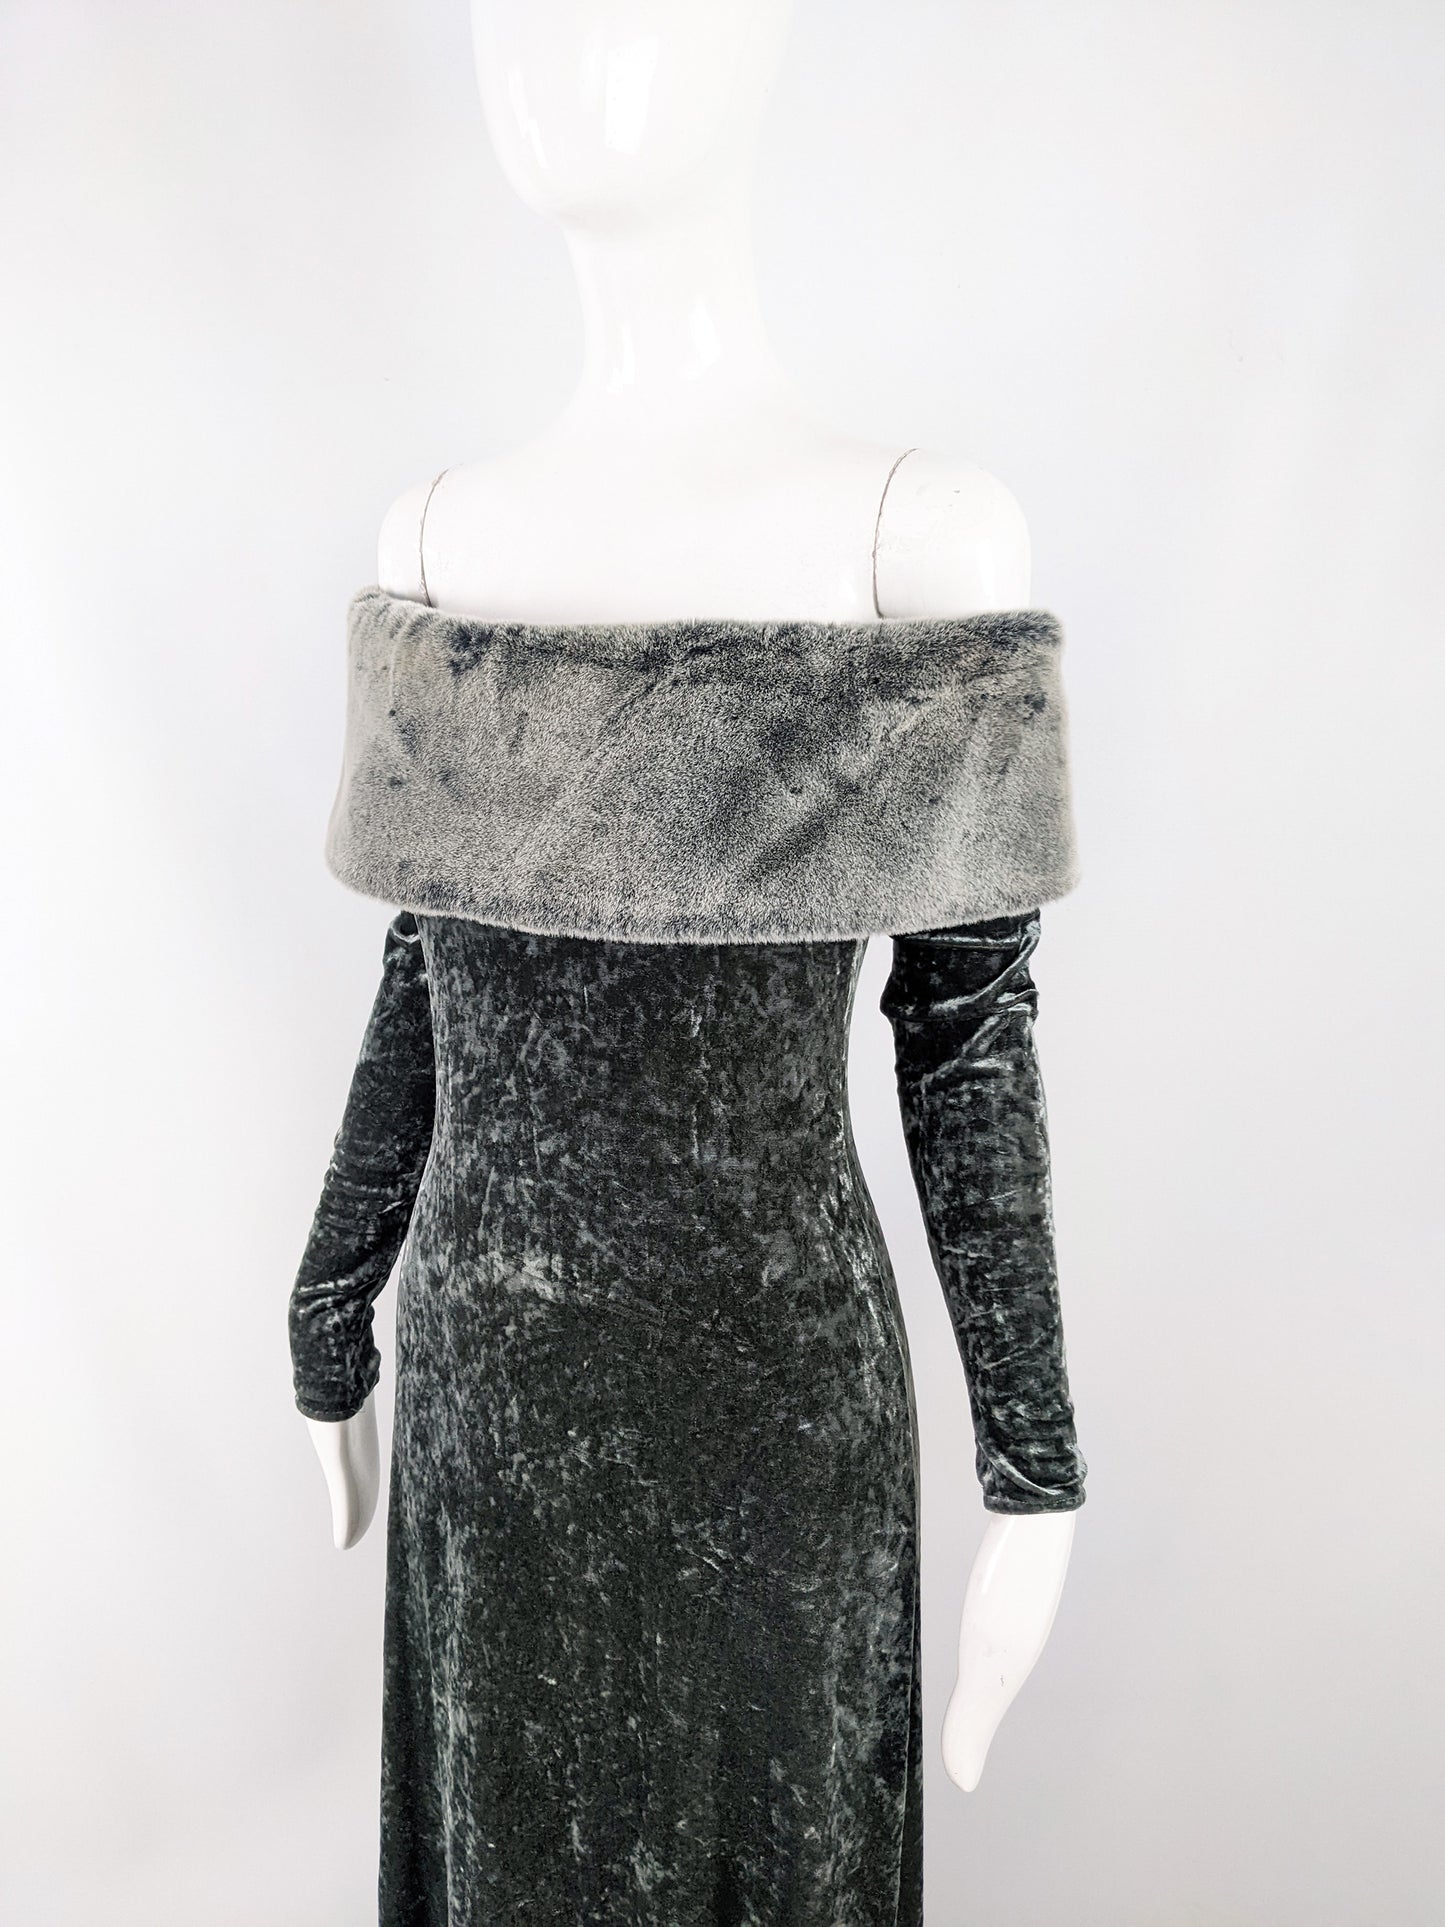 Harrods Vintage Crushed Velour & Faux Fur Evening Gown, 1980s